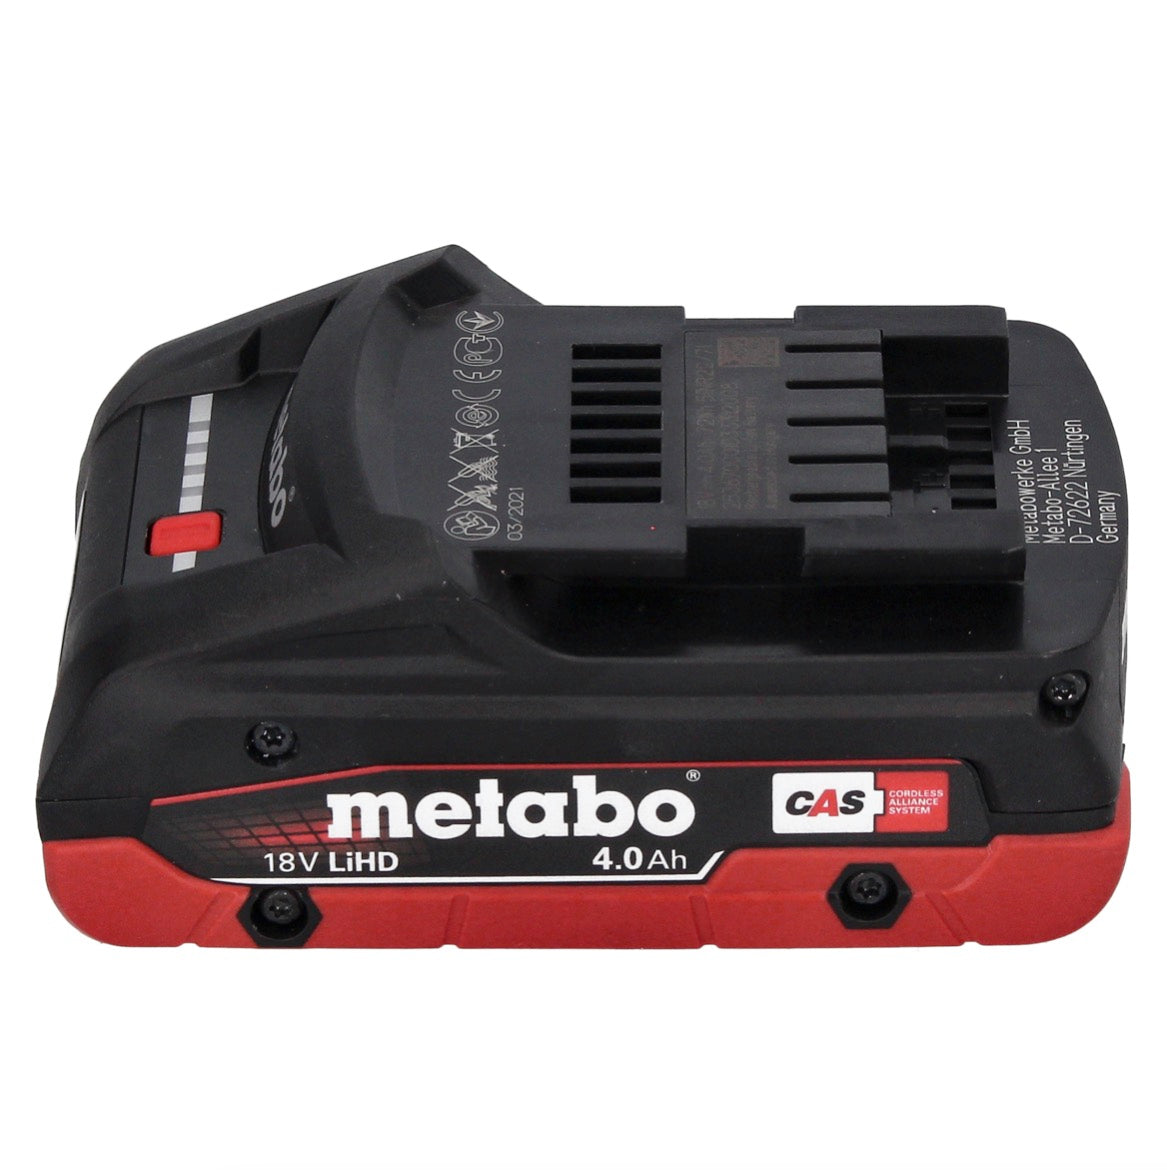 Metabo WPB 18 LT BL 11-125 Quick Akku Winkelschleifer 18 V 125 mm Brushless + 1x Akku 4,0 Ah + metaBOX - ohne Ladegerät - Toolbrothers